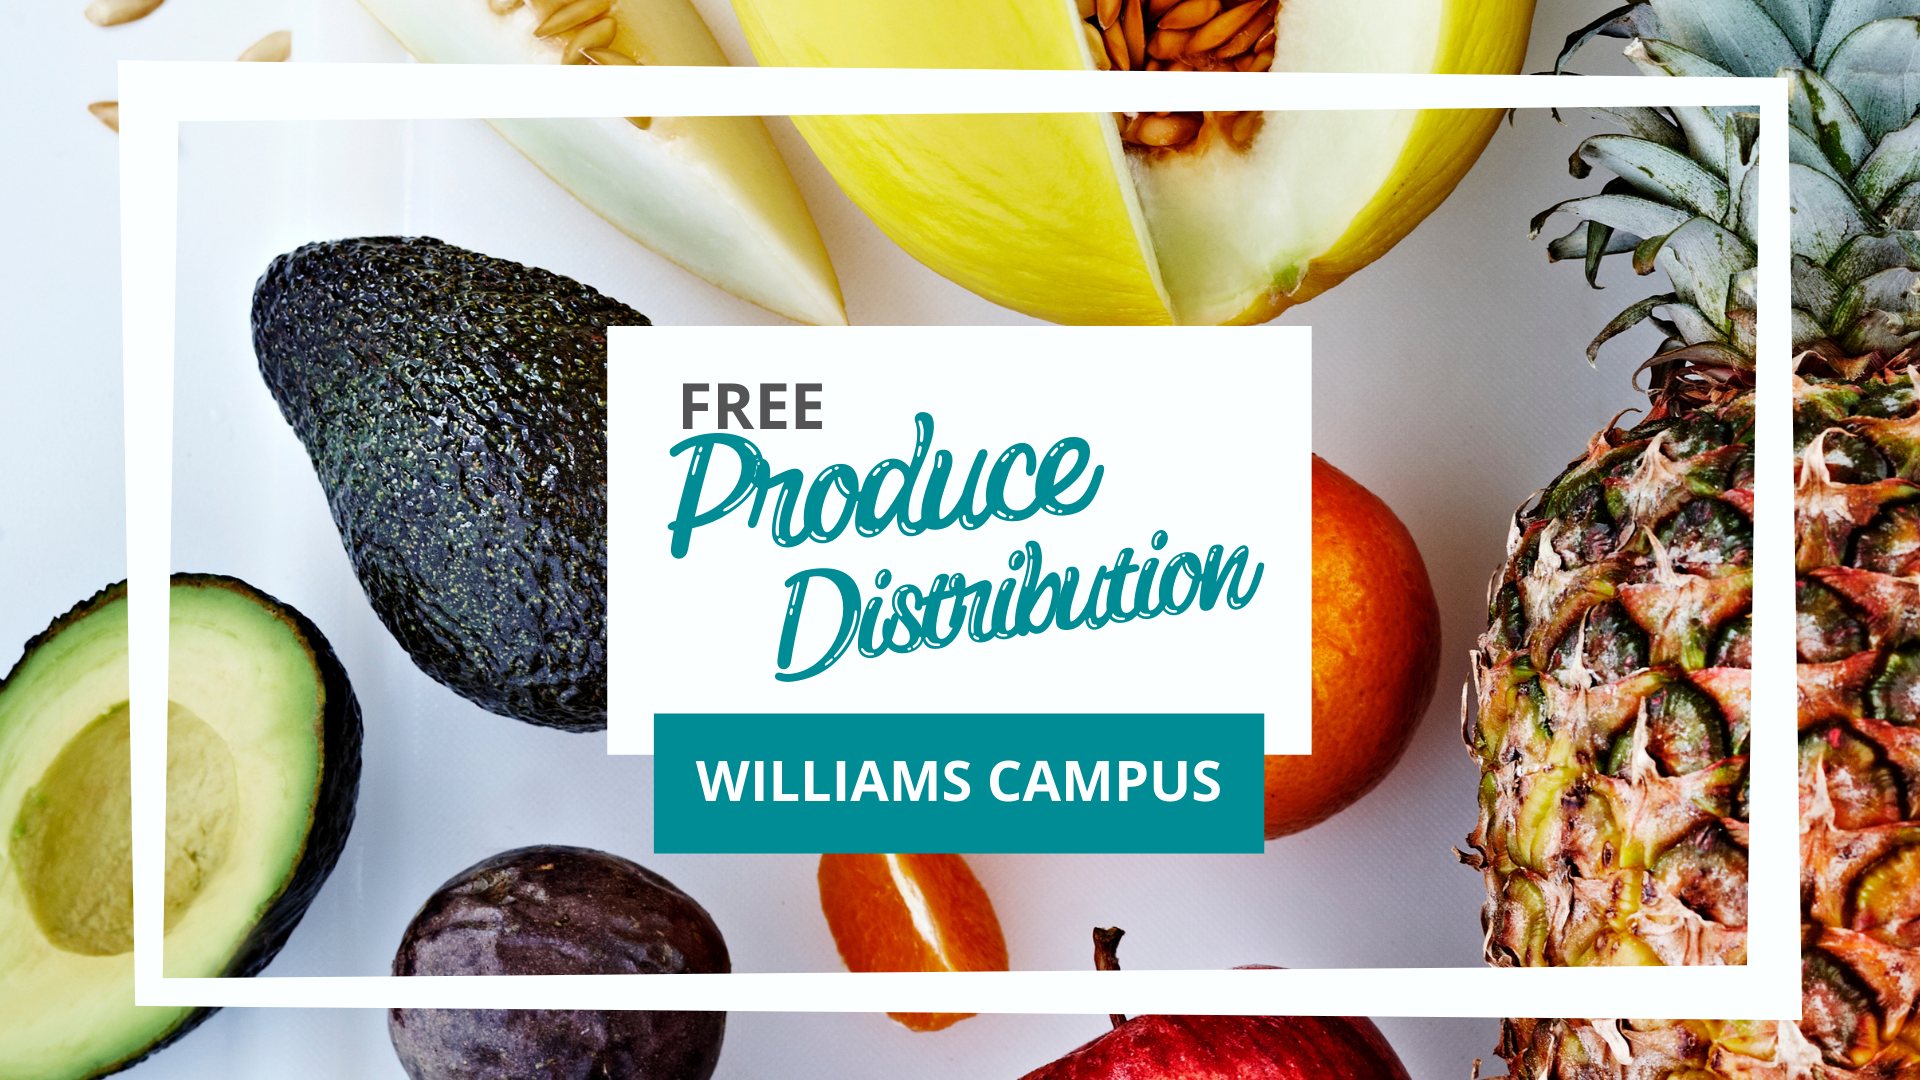 Williams Free Produce Distribution